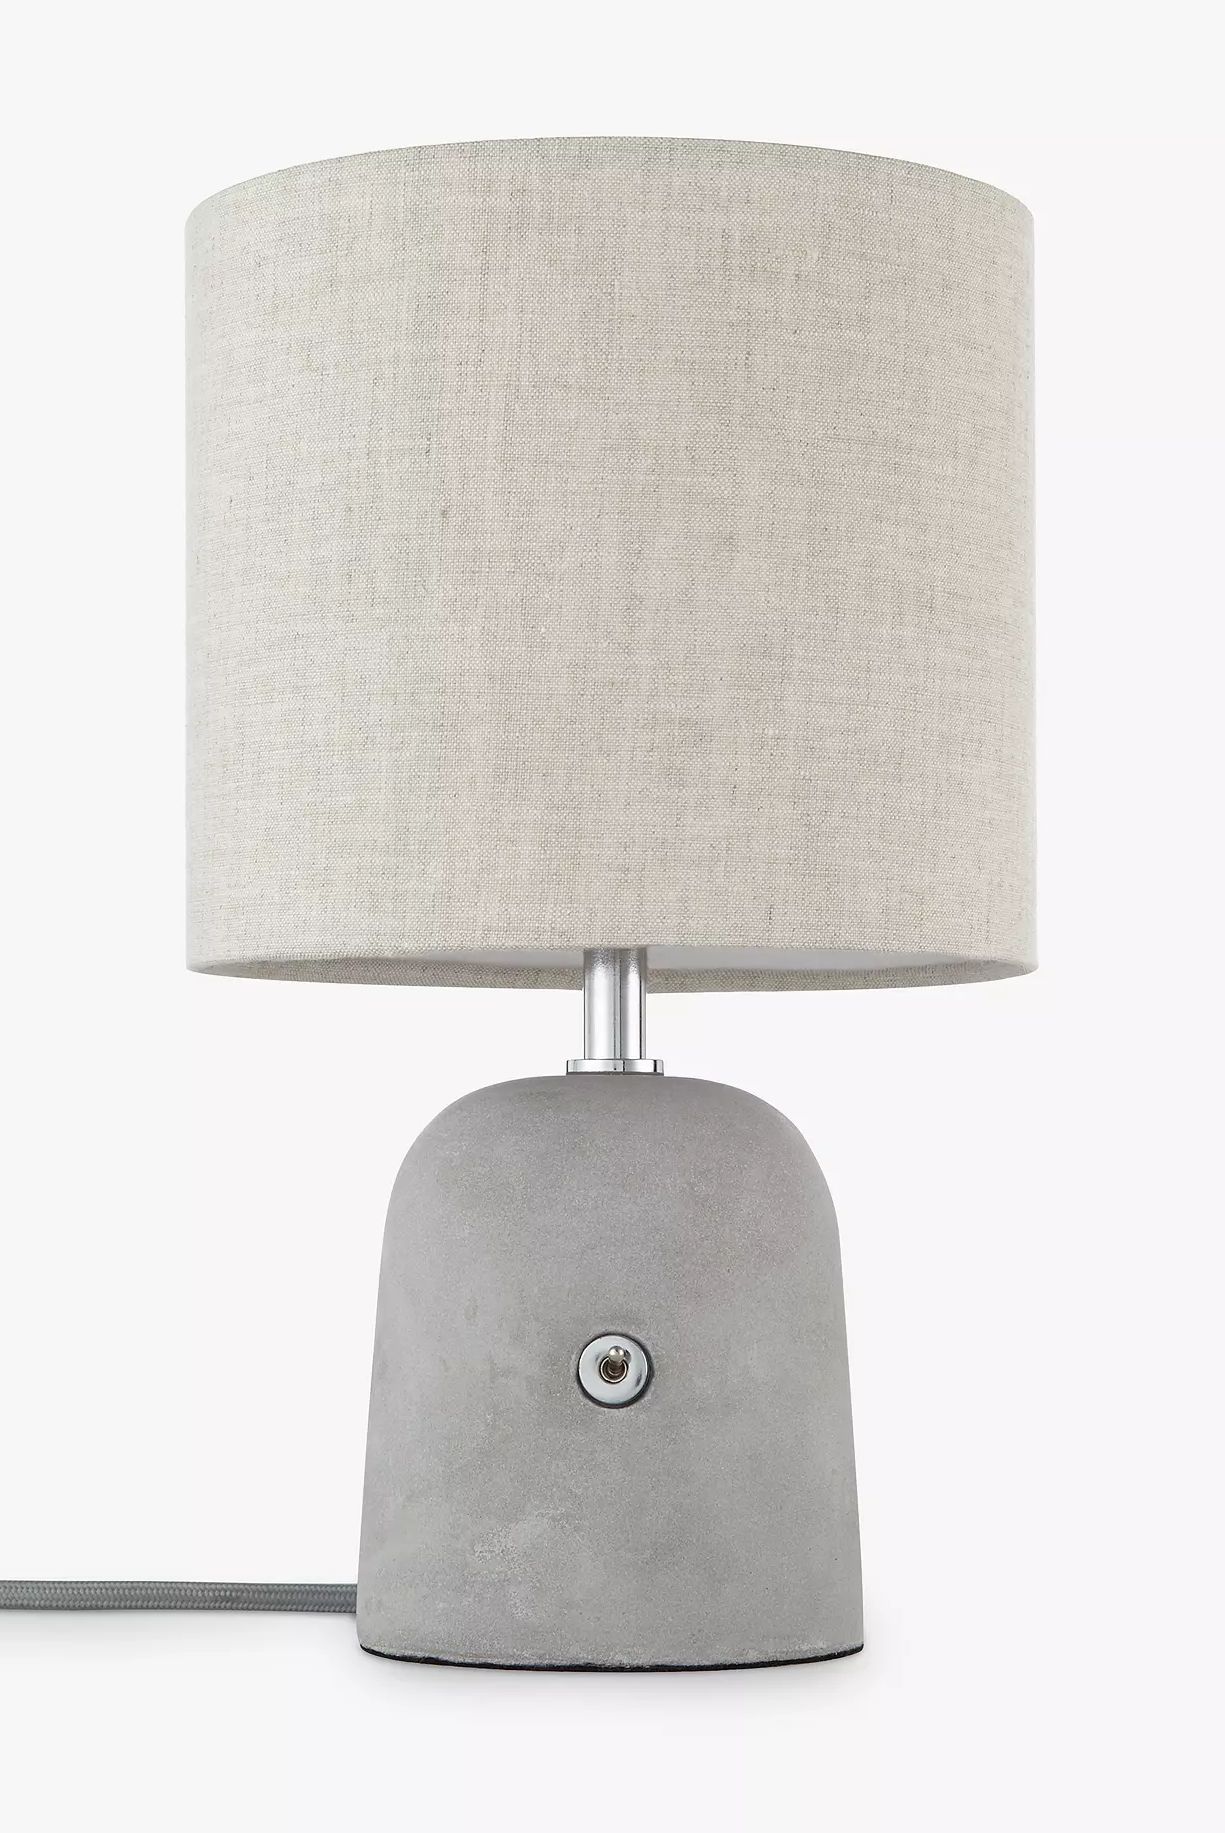 Meryl concrete table lamp